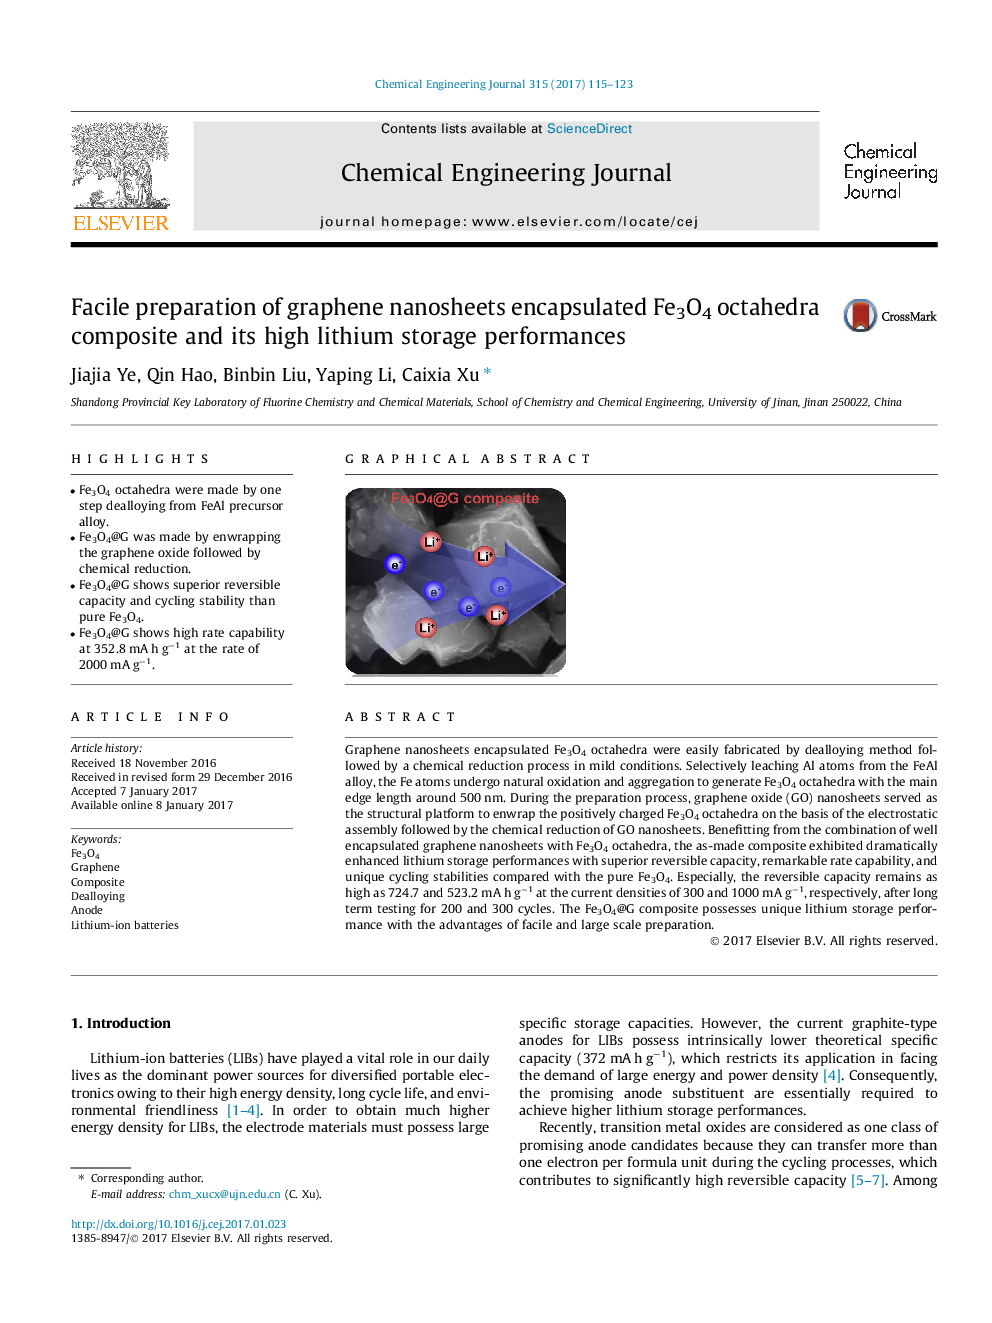 Facile preparation of graphene nanosheets encapsulated Fe3O4 octahedra composite and its high lithium storage performances